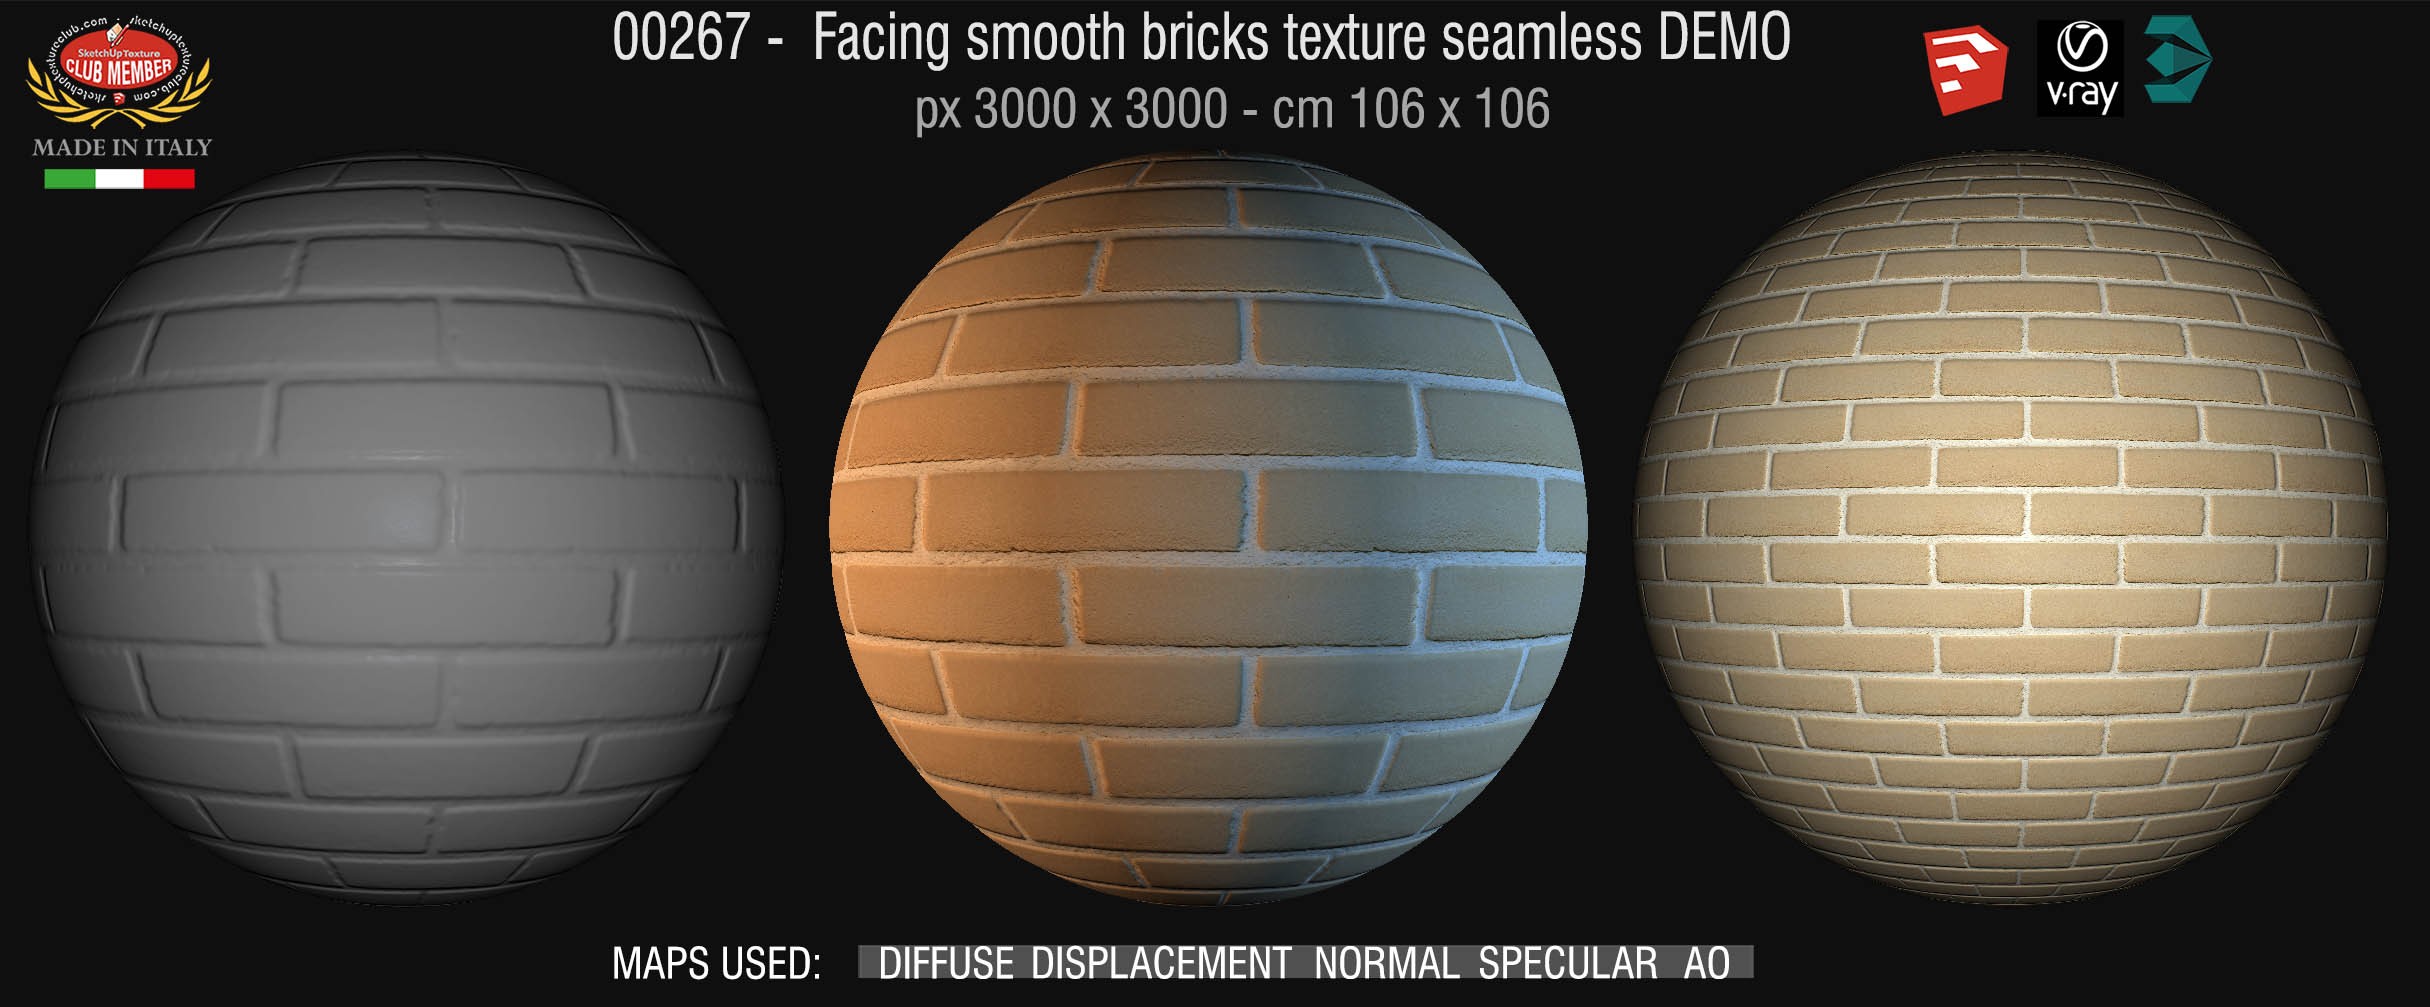 00267 Facing smooth bricks texture seamless + maps DEMO